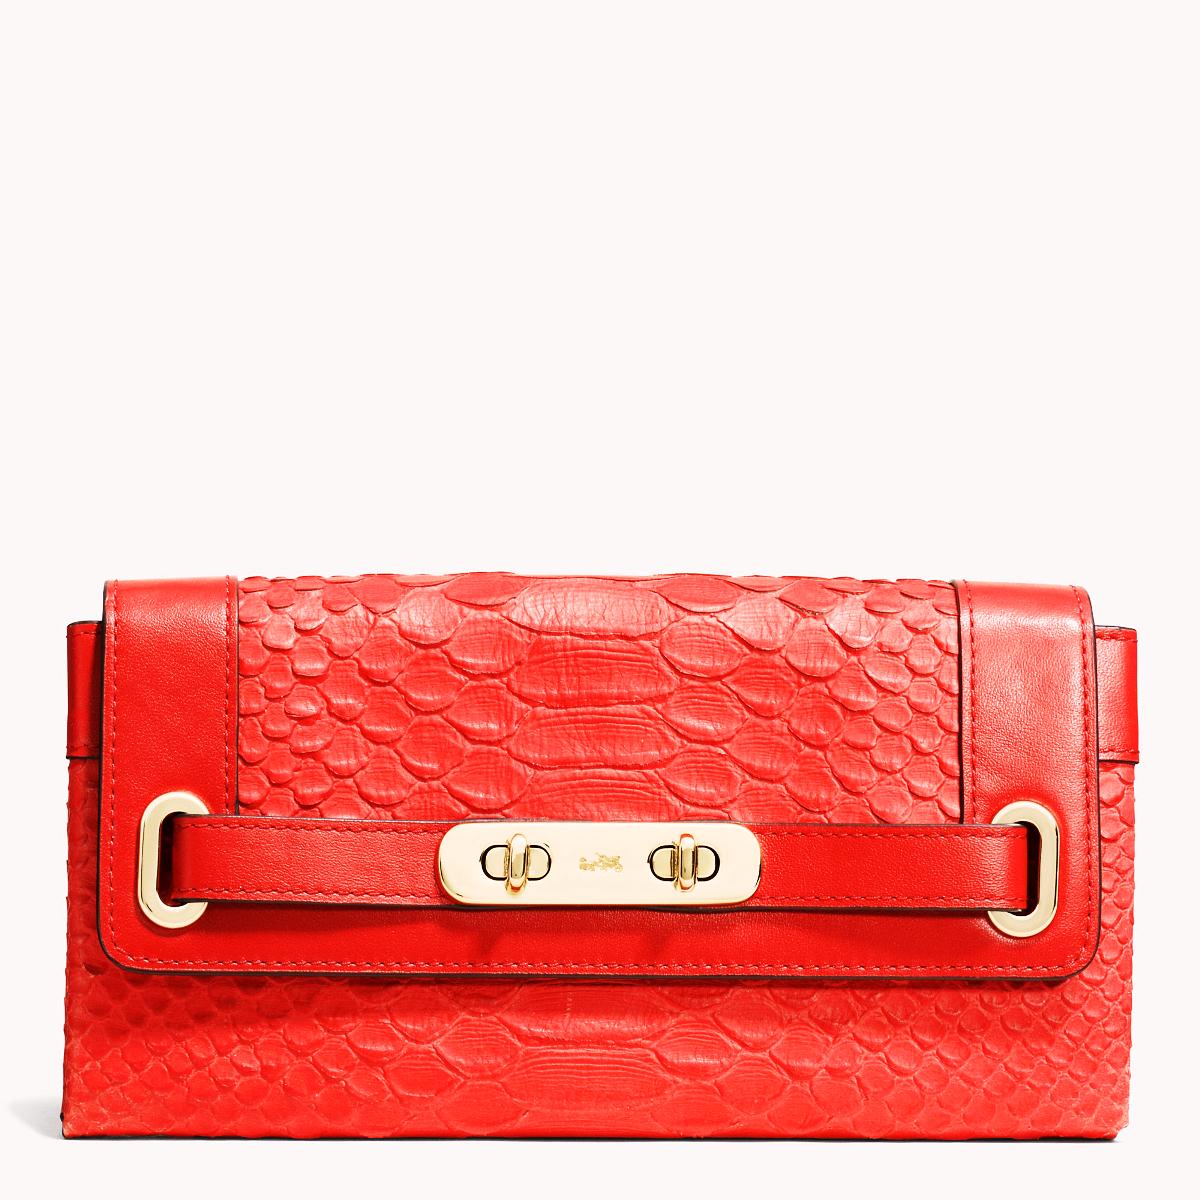 Popular Coach New Wallet For Women 2015 - Blog for Best Designer Bags Review